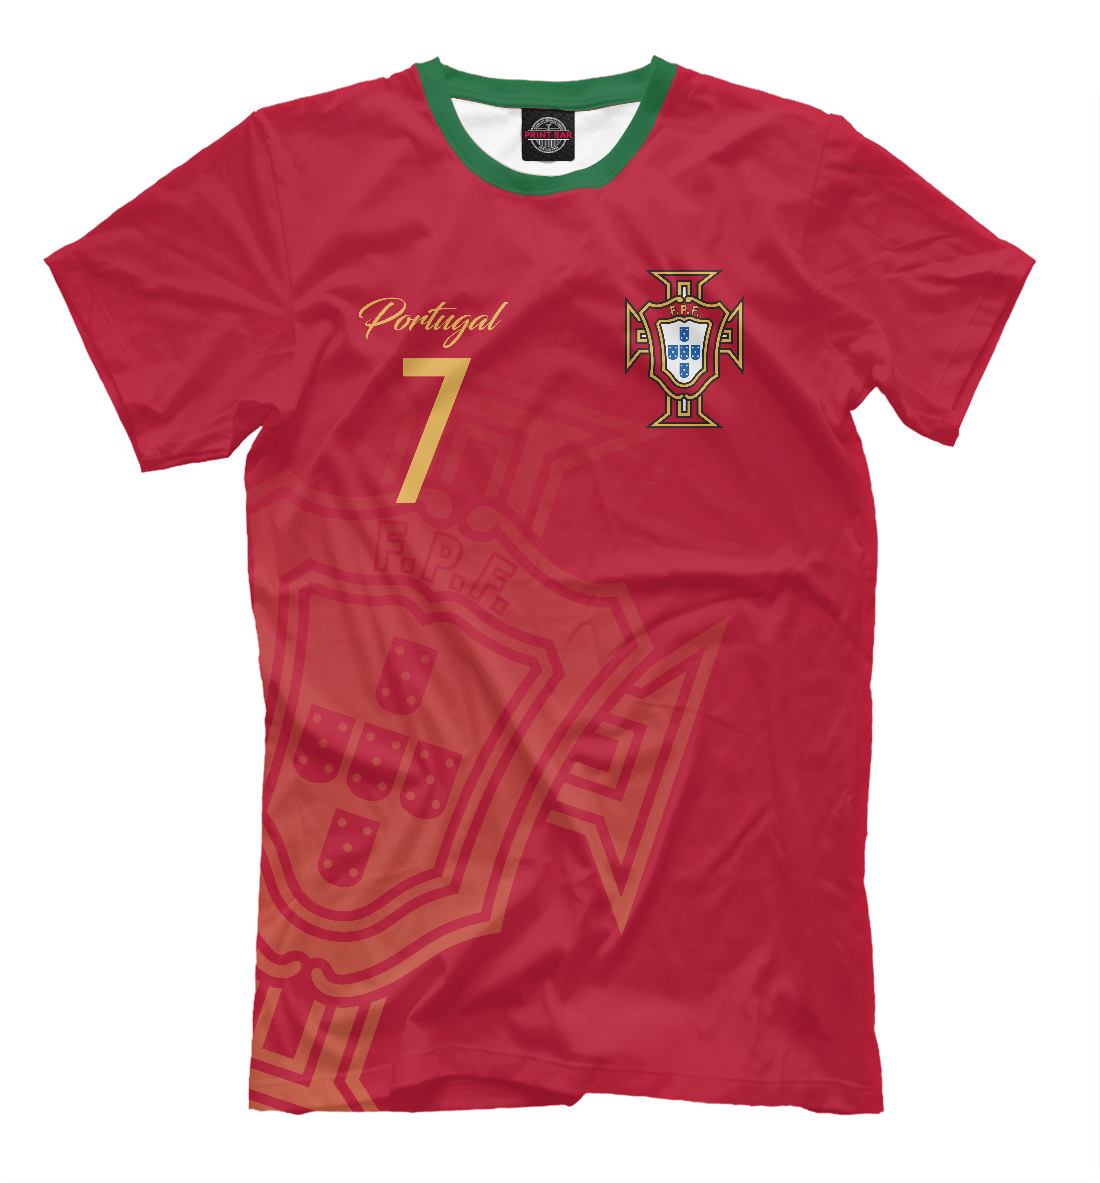 Футболка Криштиану Роналду - Сборная Португалии для мужчин, артикул: FLT-712423-fut-2mp